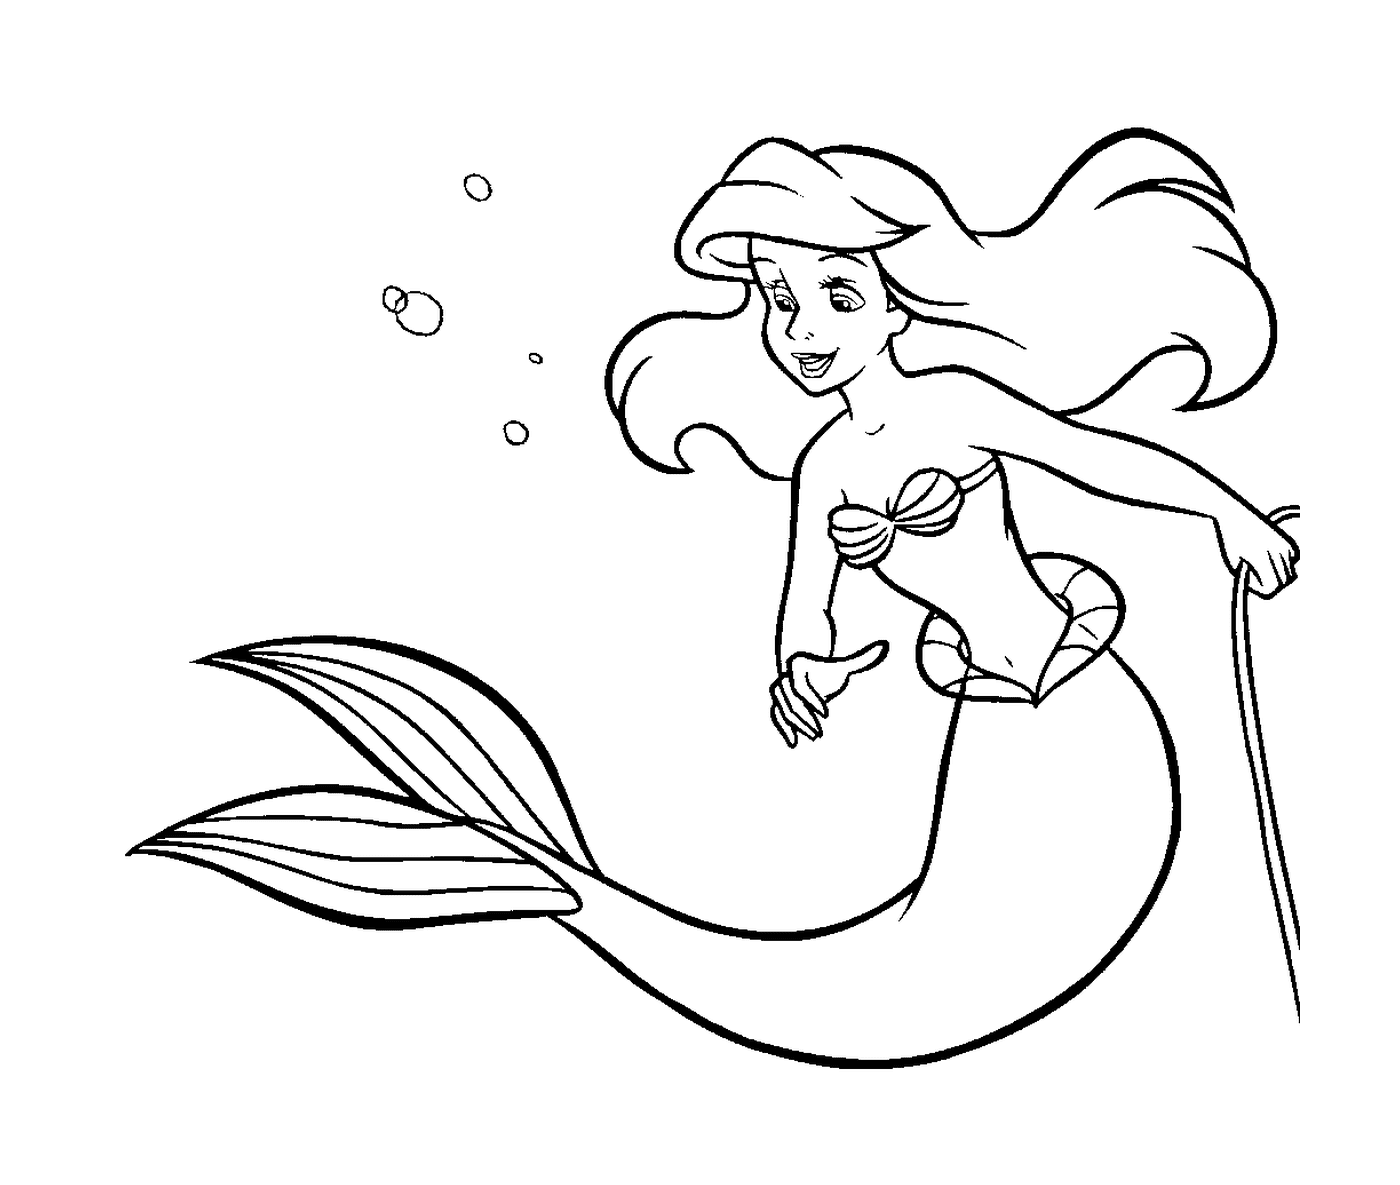  A mermaid 